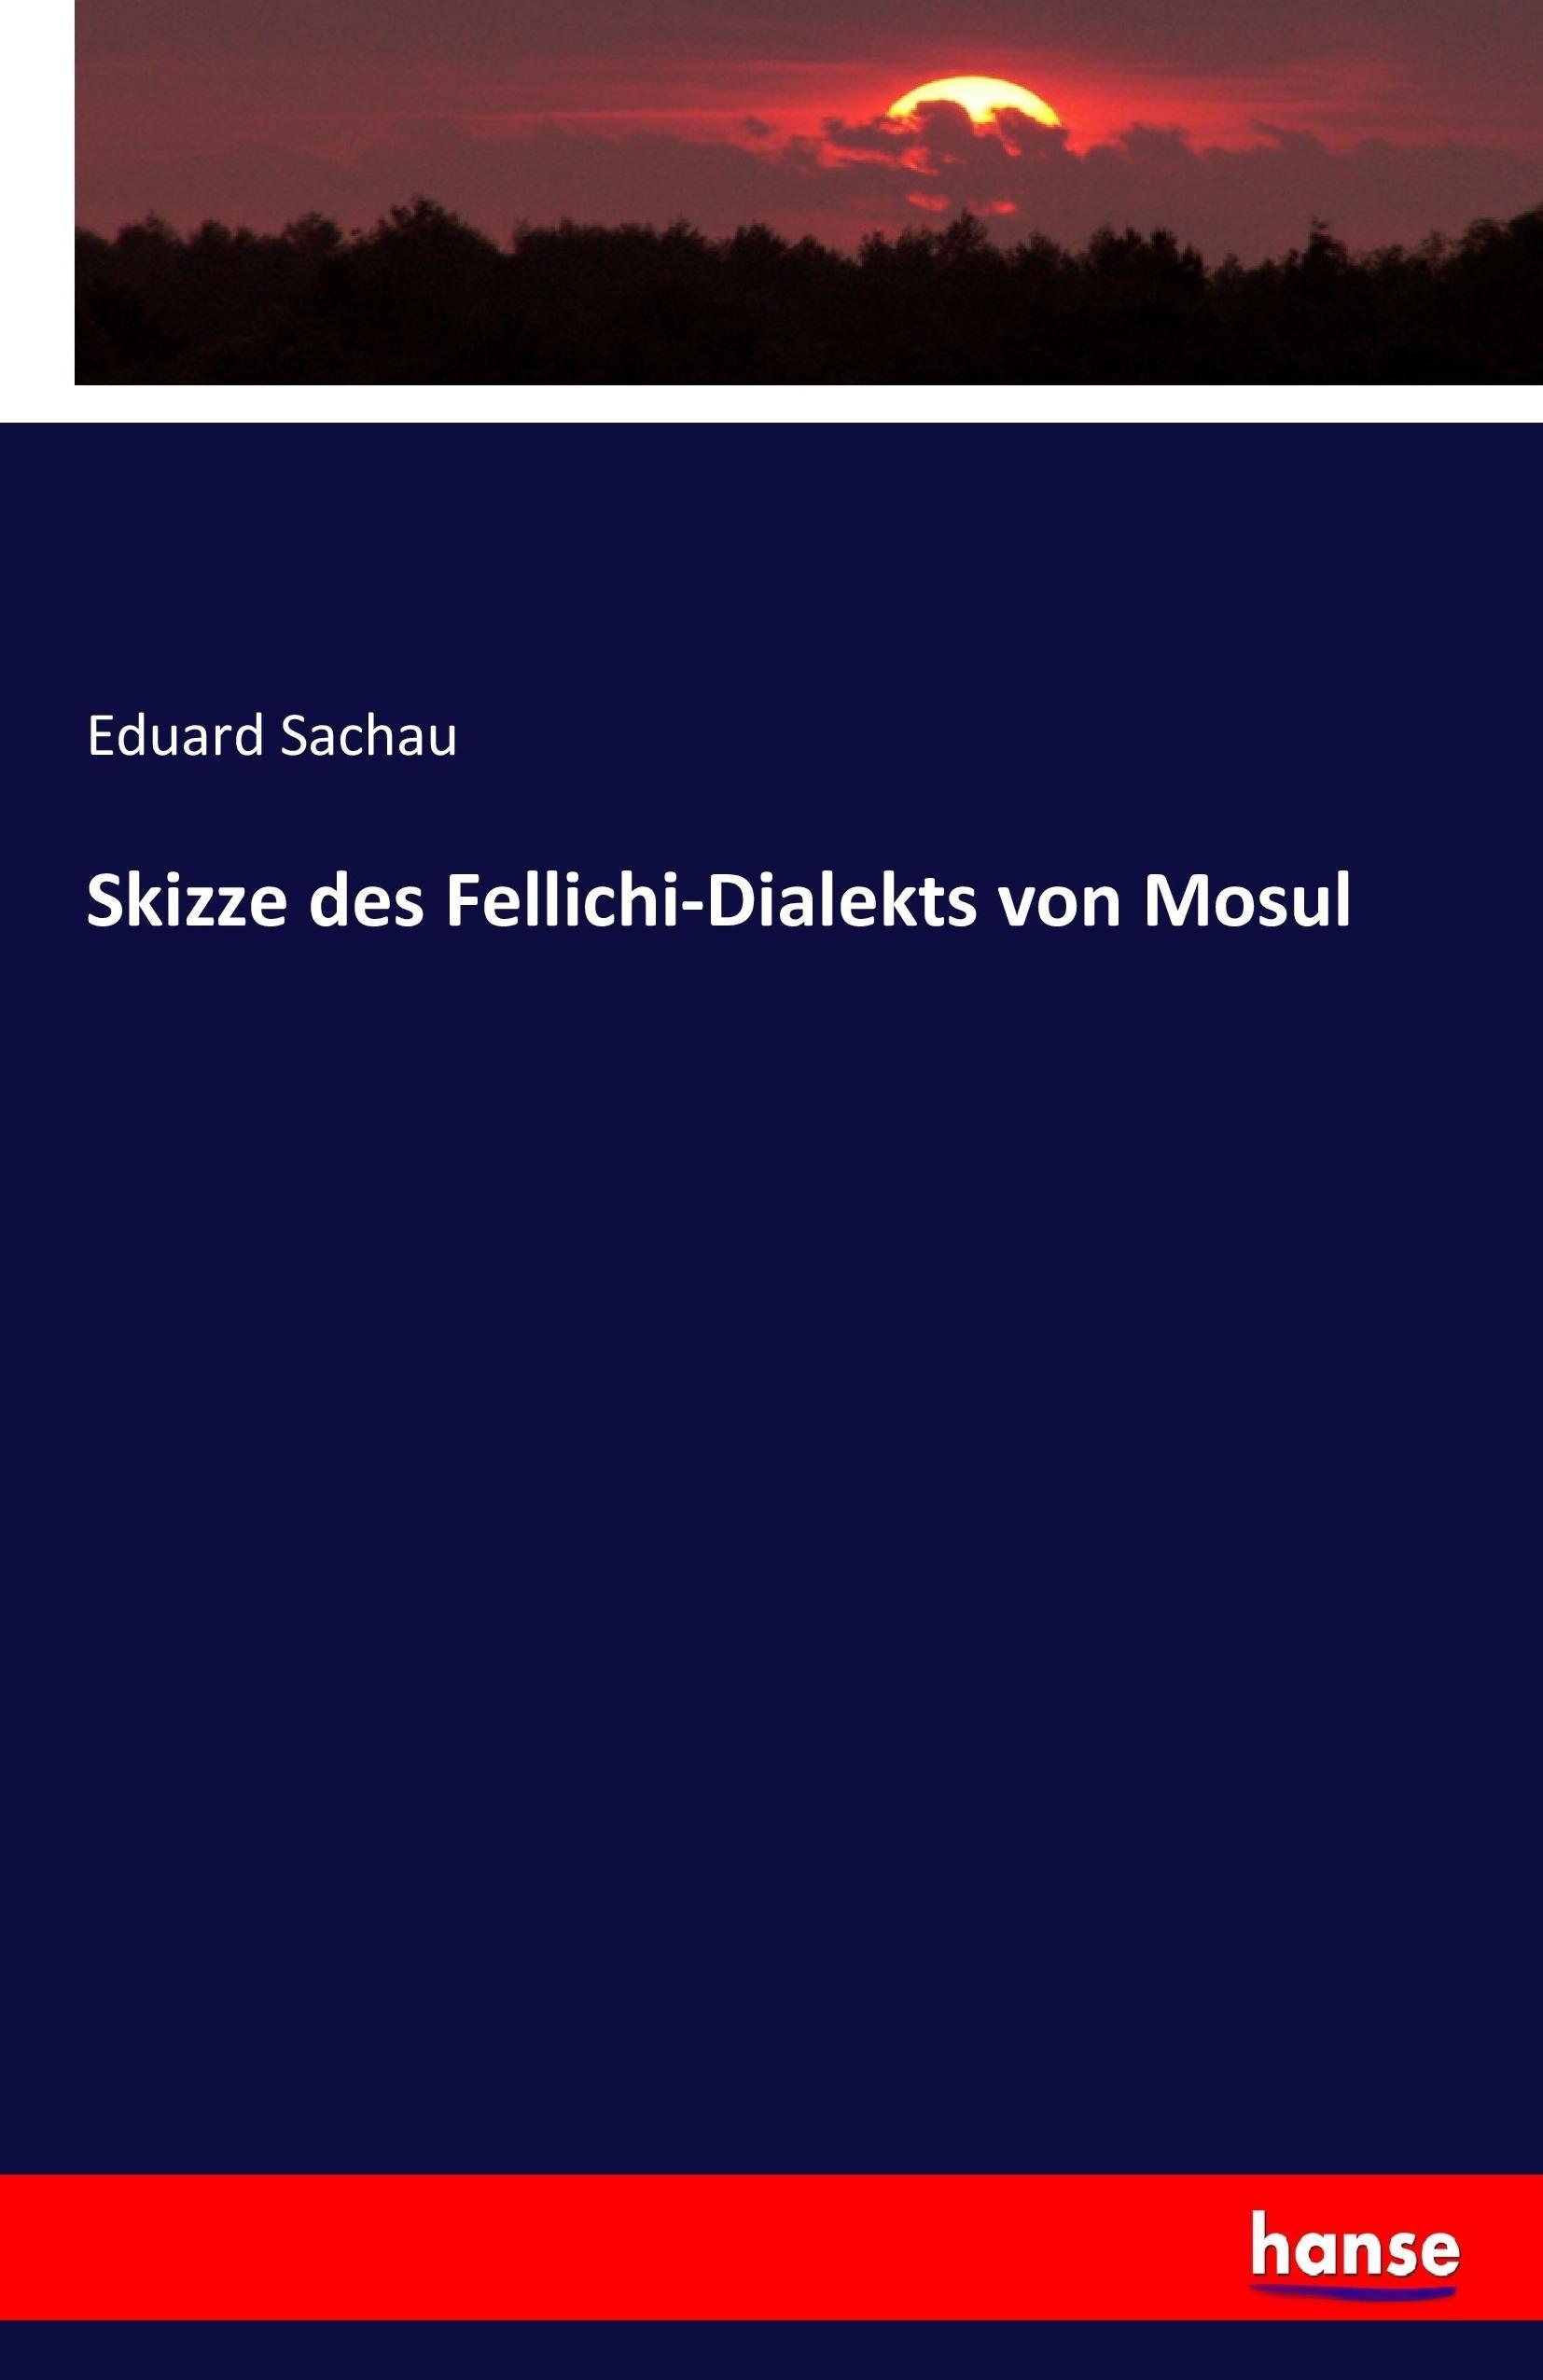 Skizze des Fellichi-Dialekts von Mosul - Sachau, Eduard